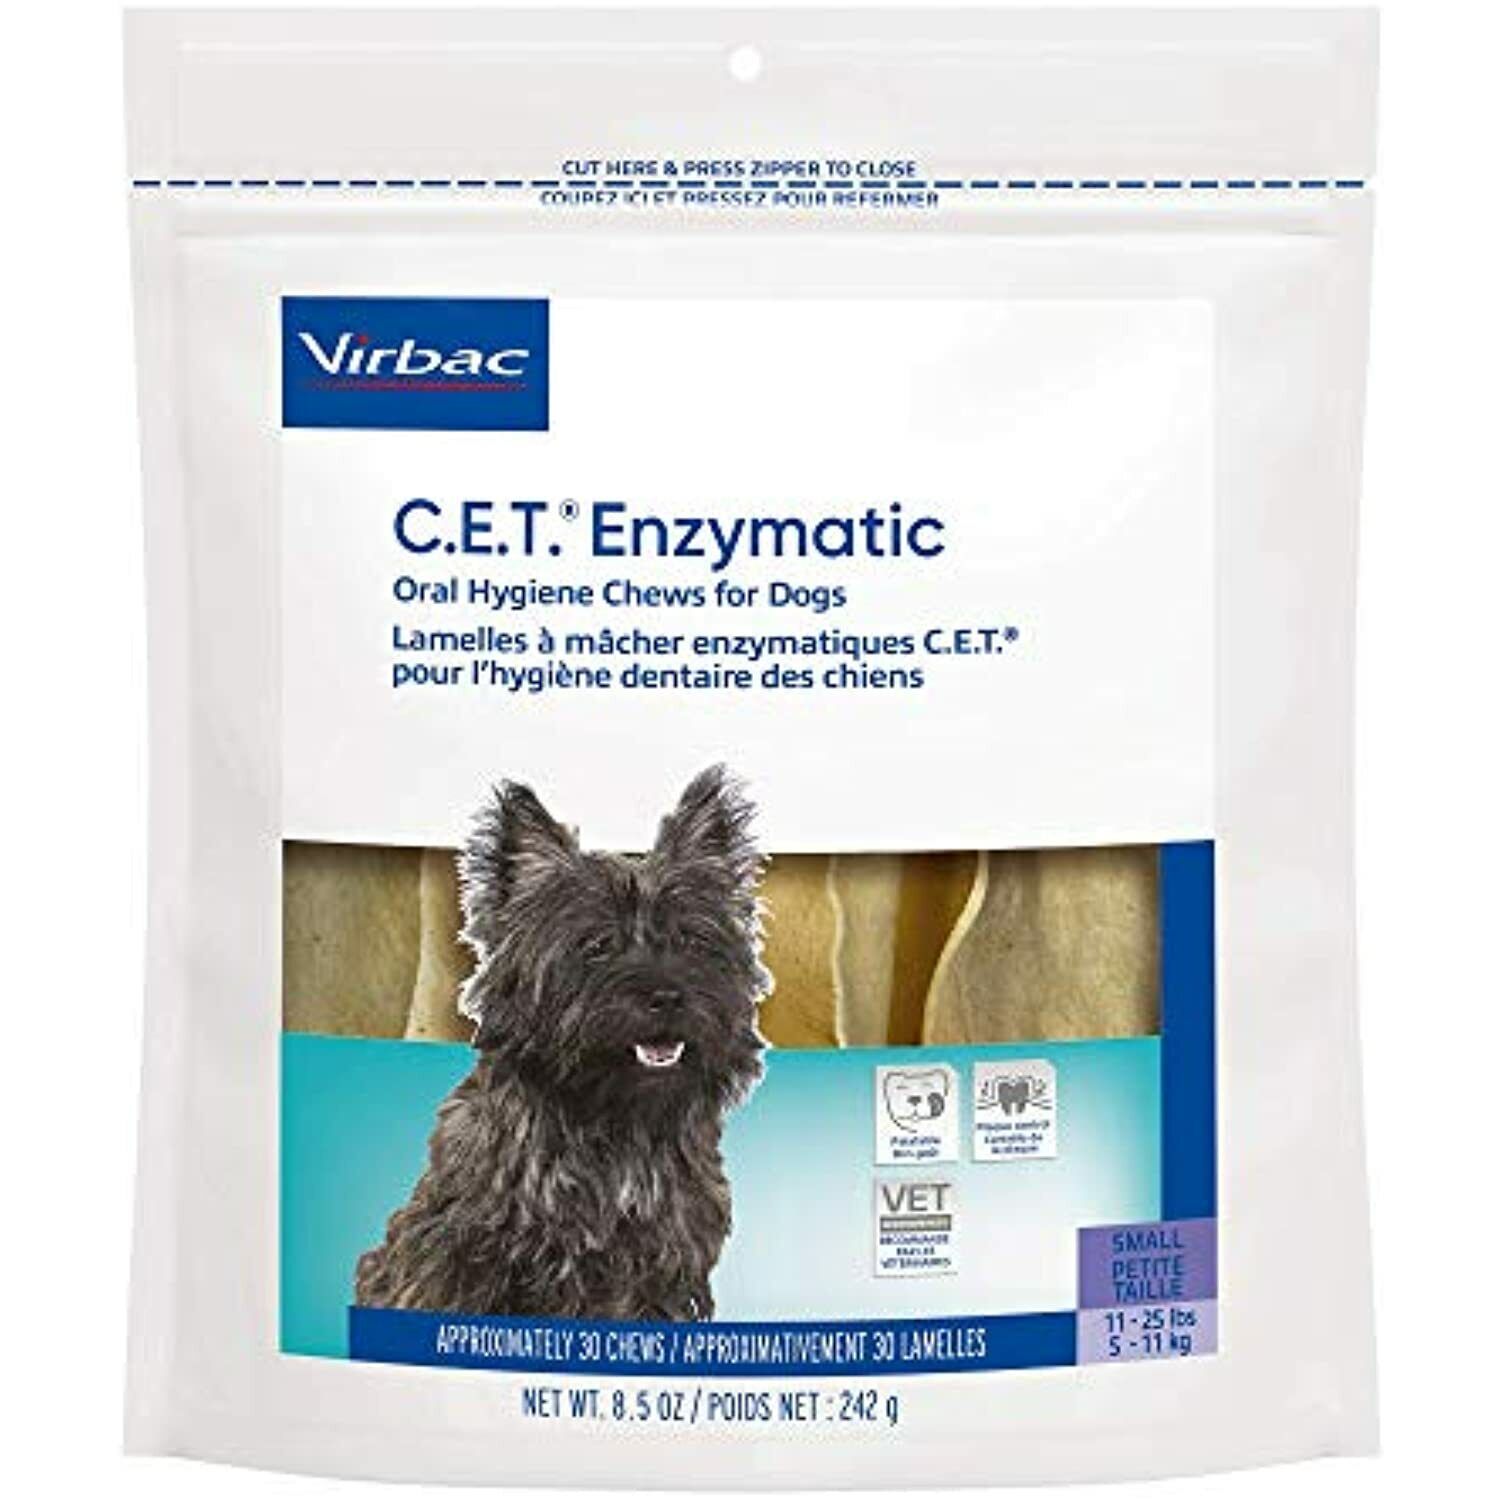 Virbac CET Enzymatic Oral Hygiene Chews for Dogs (Small)